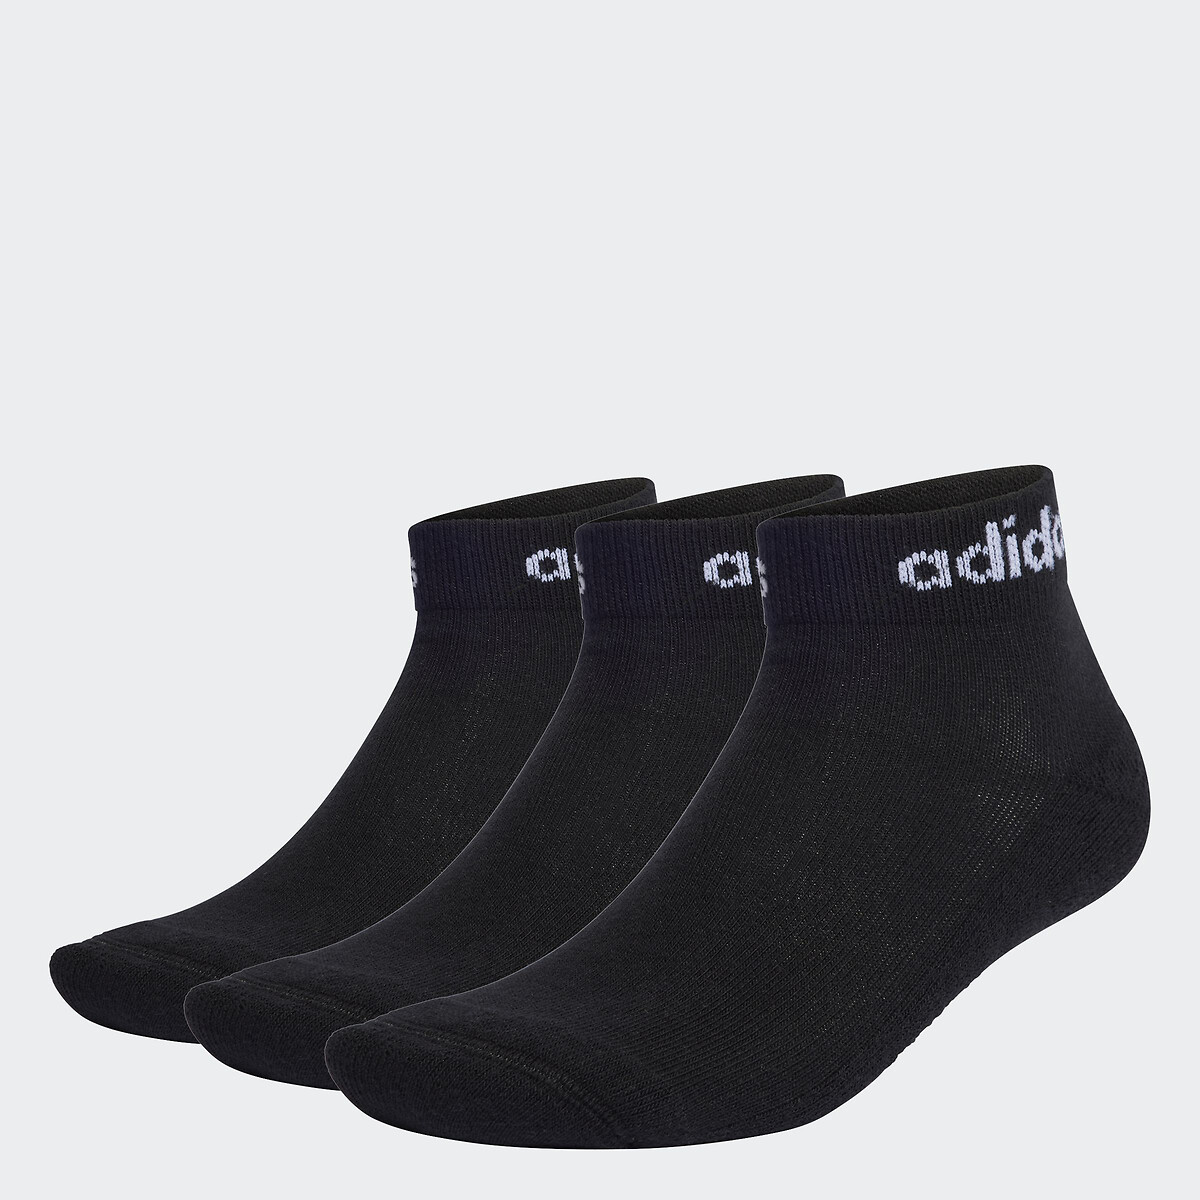 Lote de 3 pares de calcetines think linear negro + negro + negro